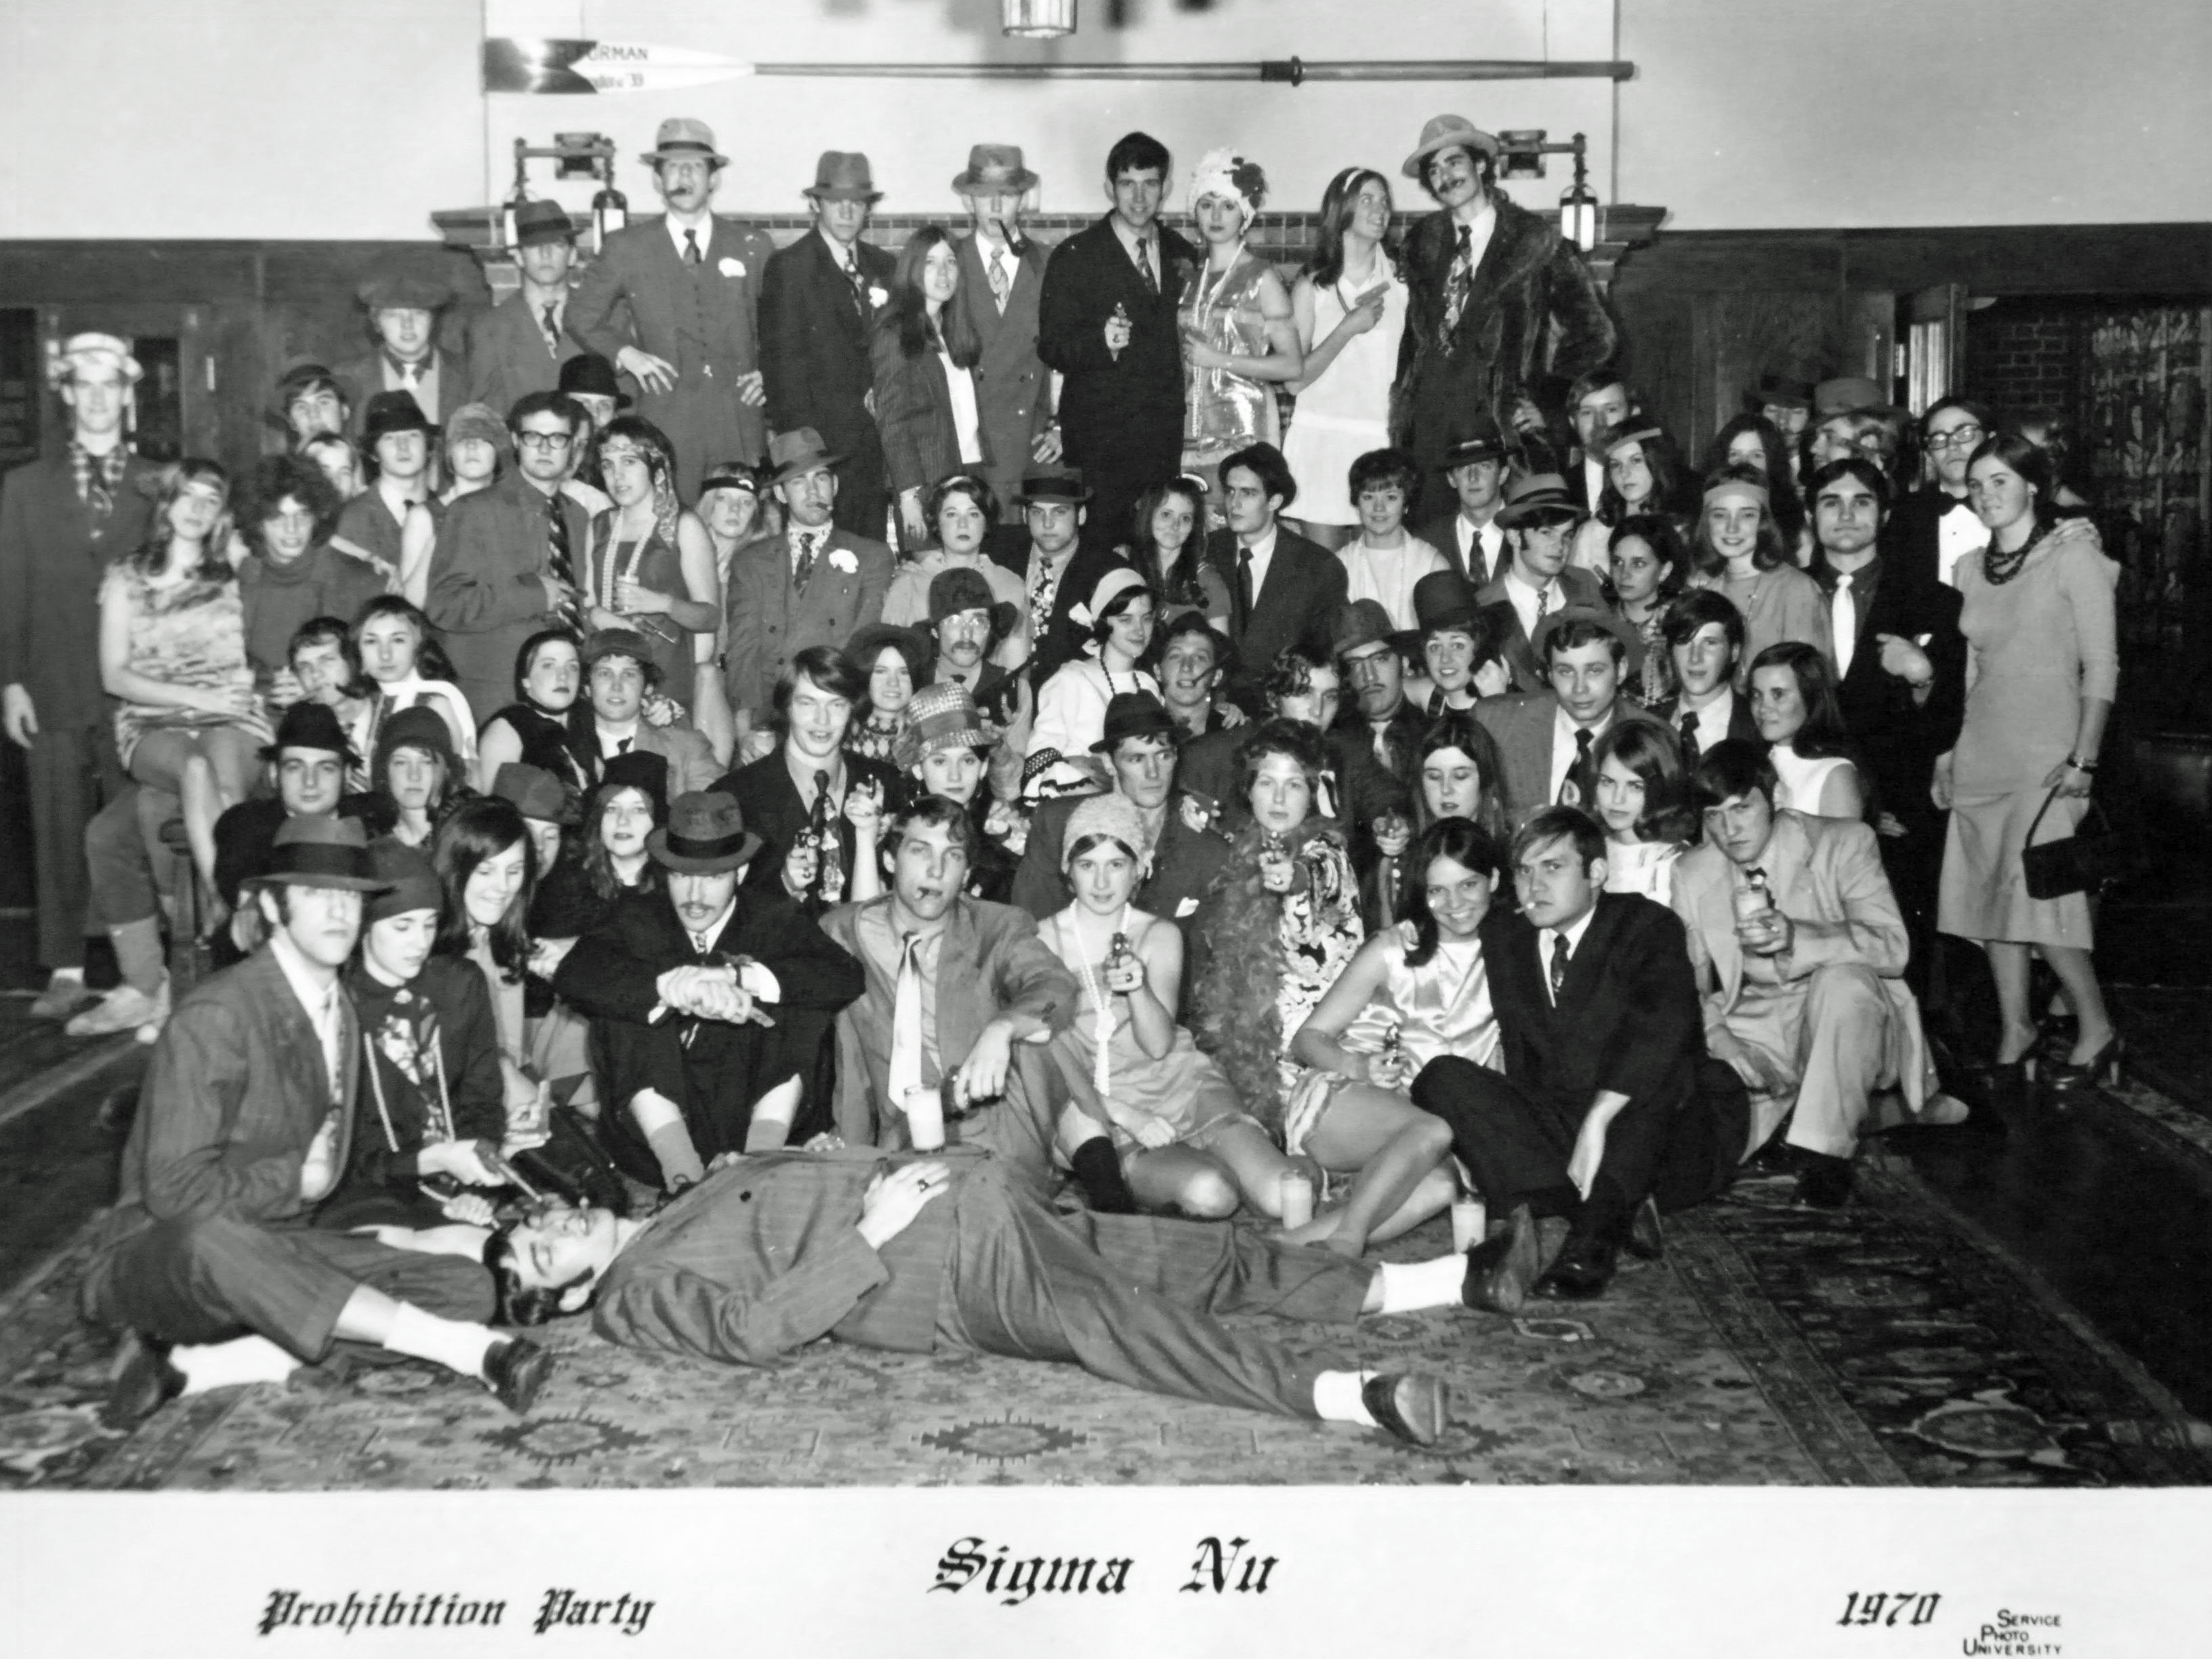 1970 Prohibition Party